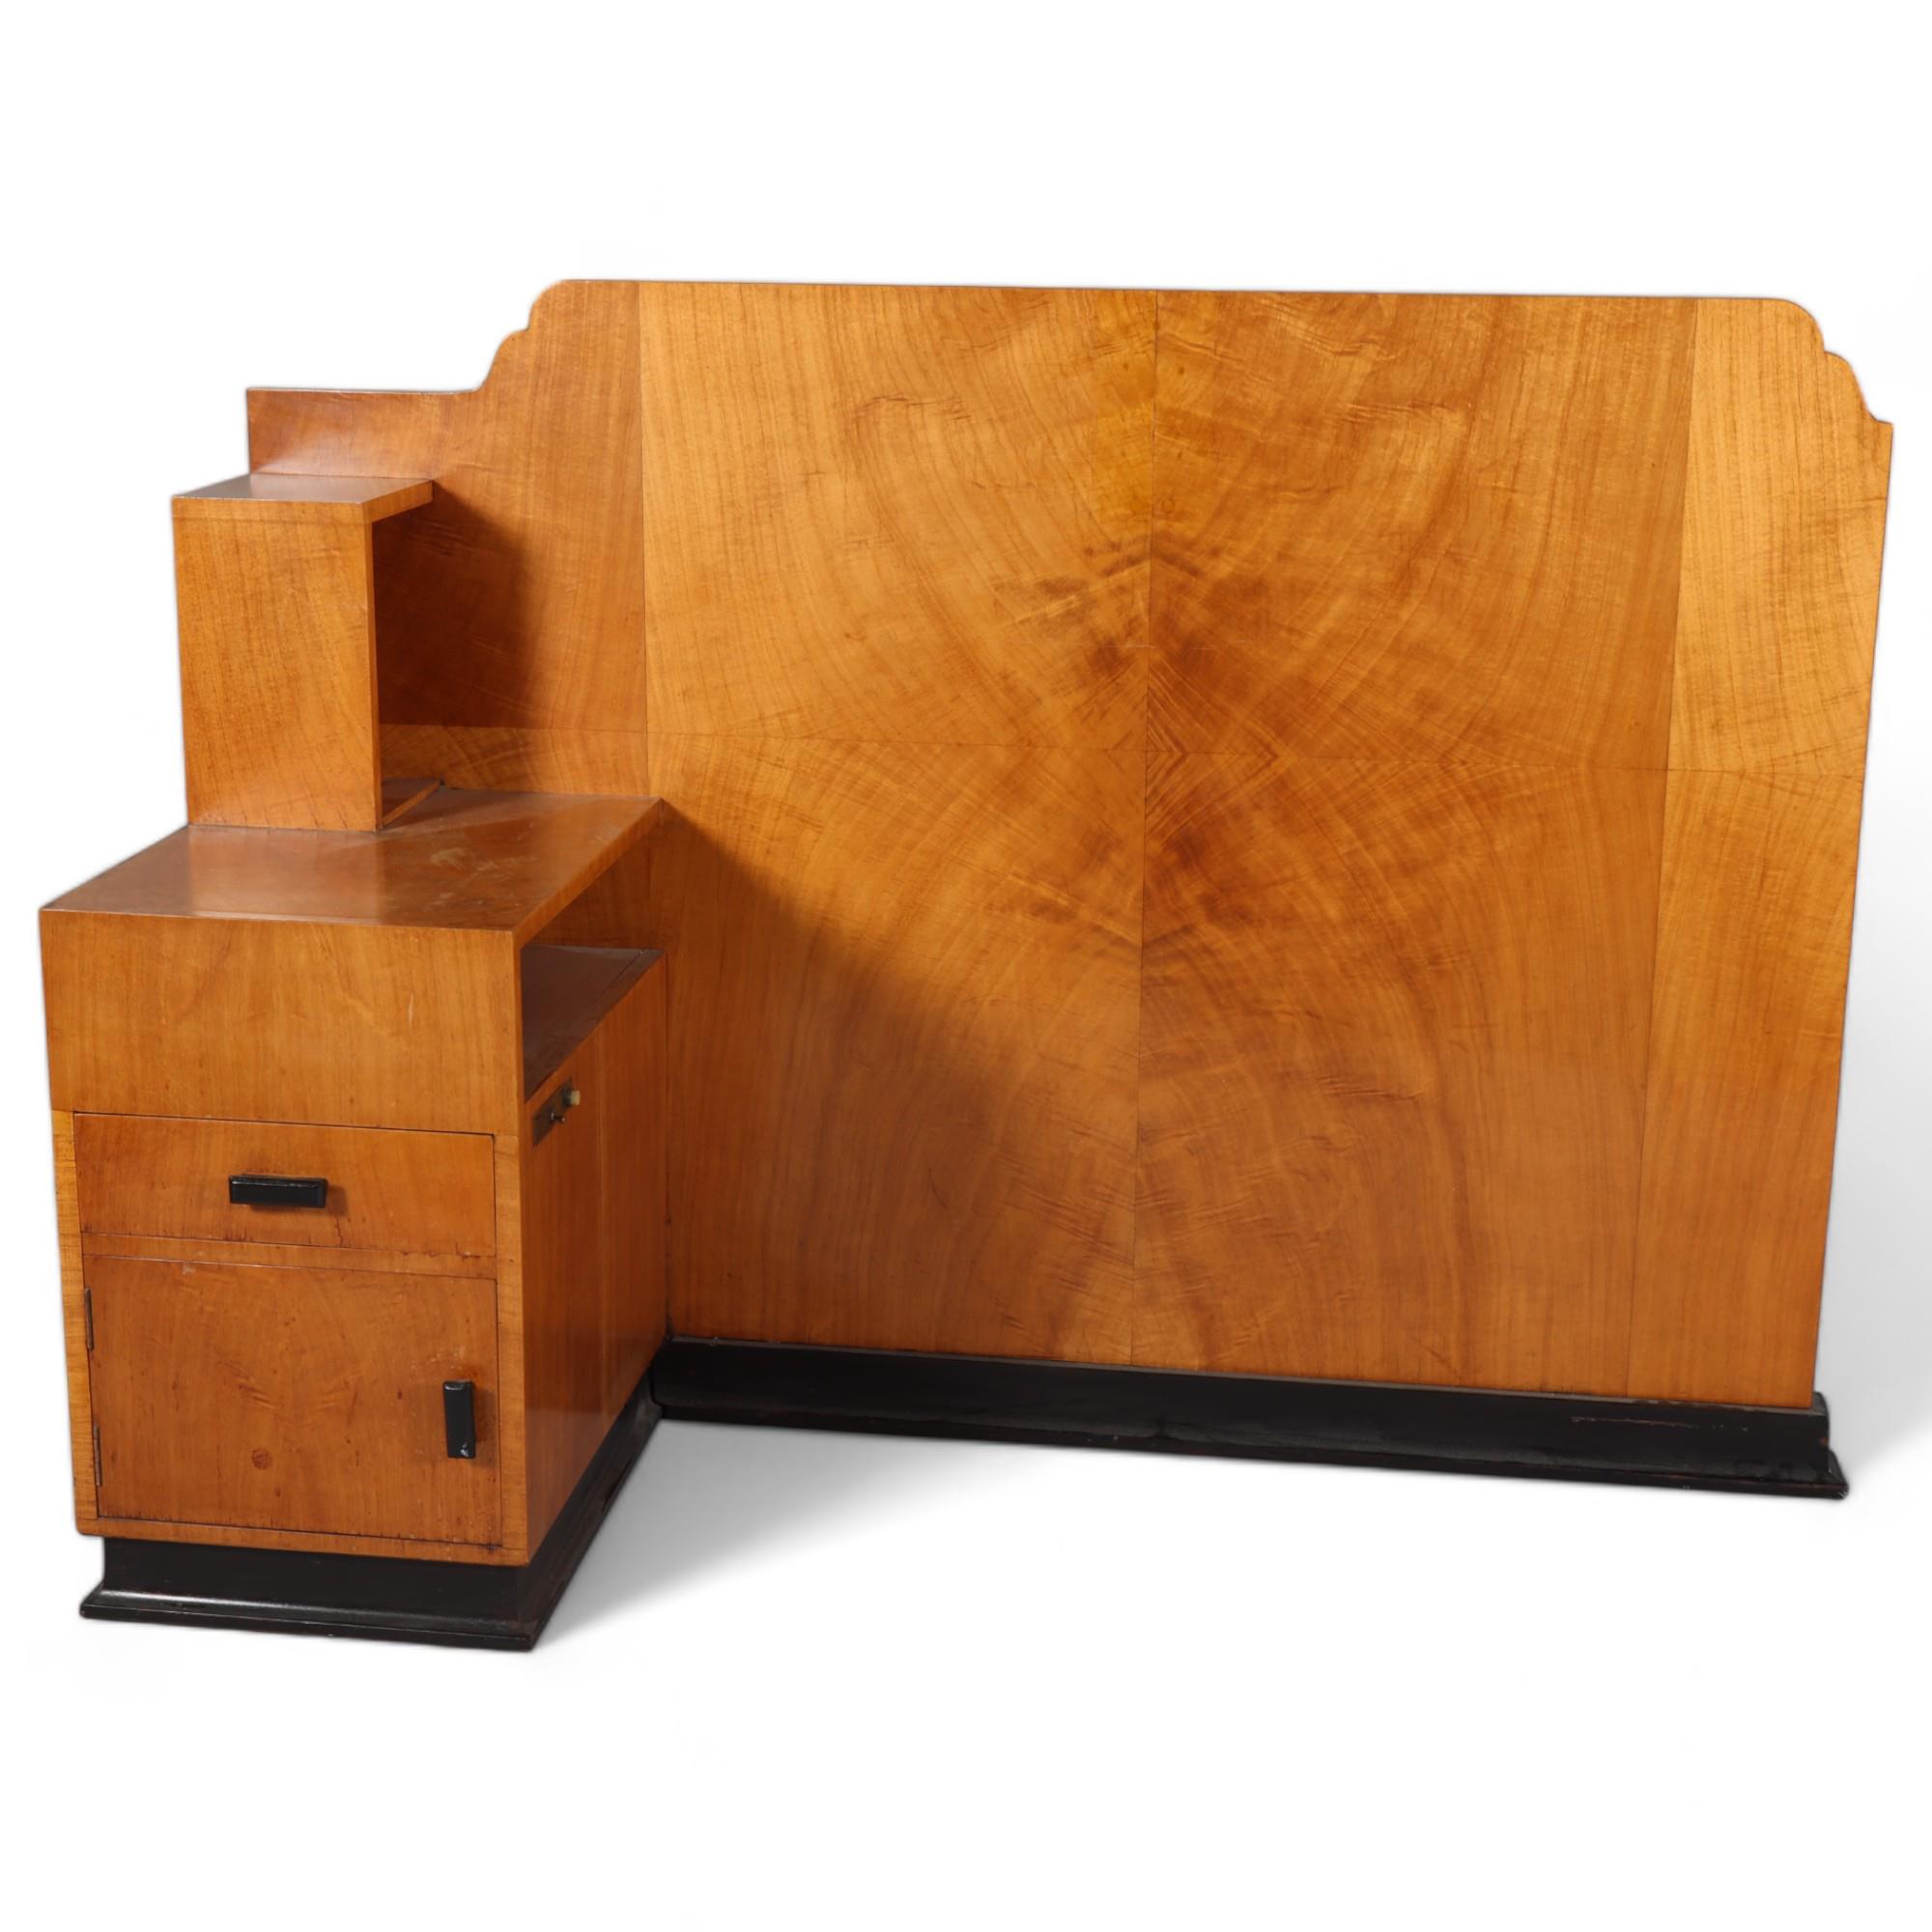 Art Deco walnut bedhead with integral bedside cupboard, width 145cm, height 107cm